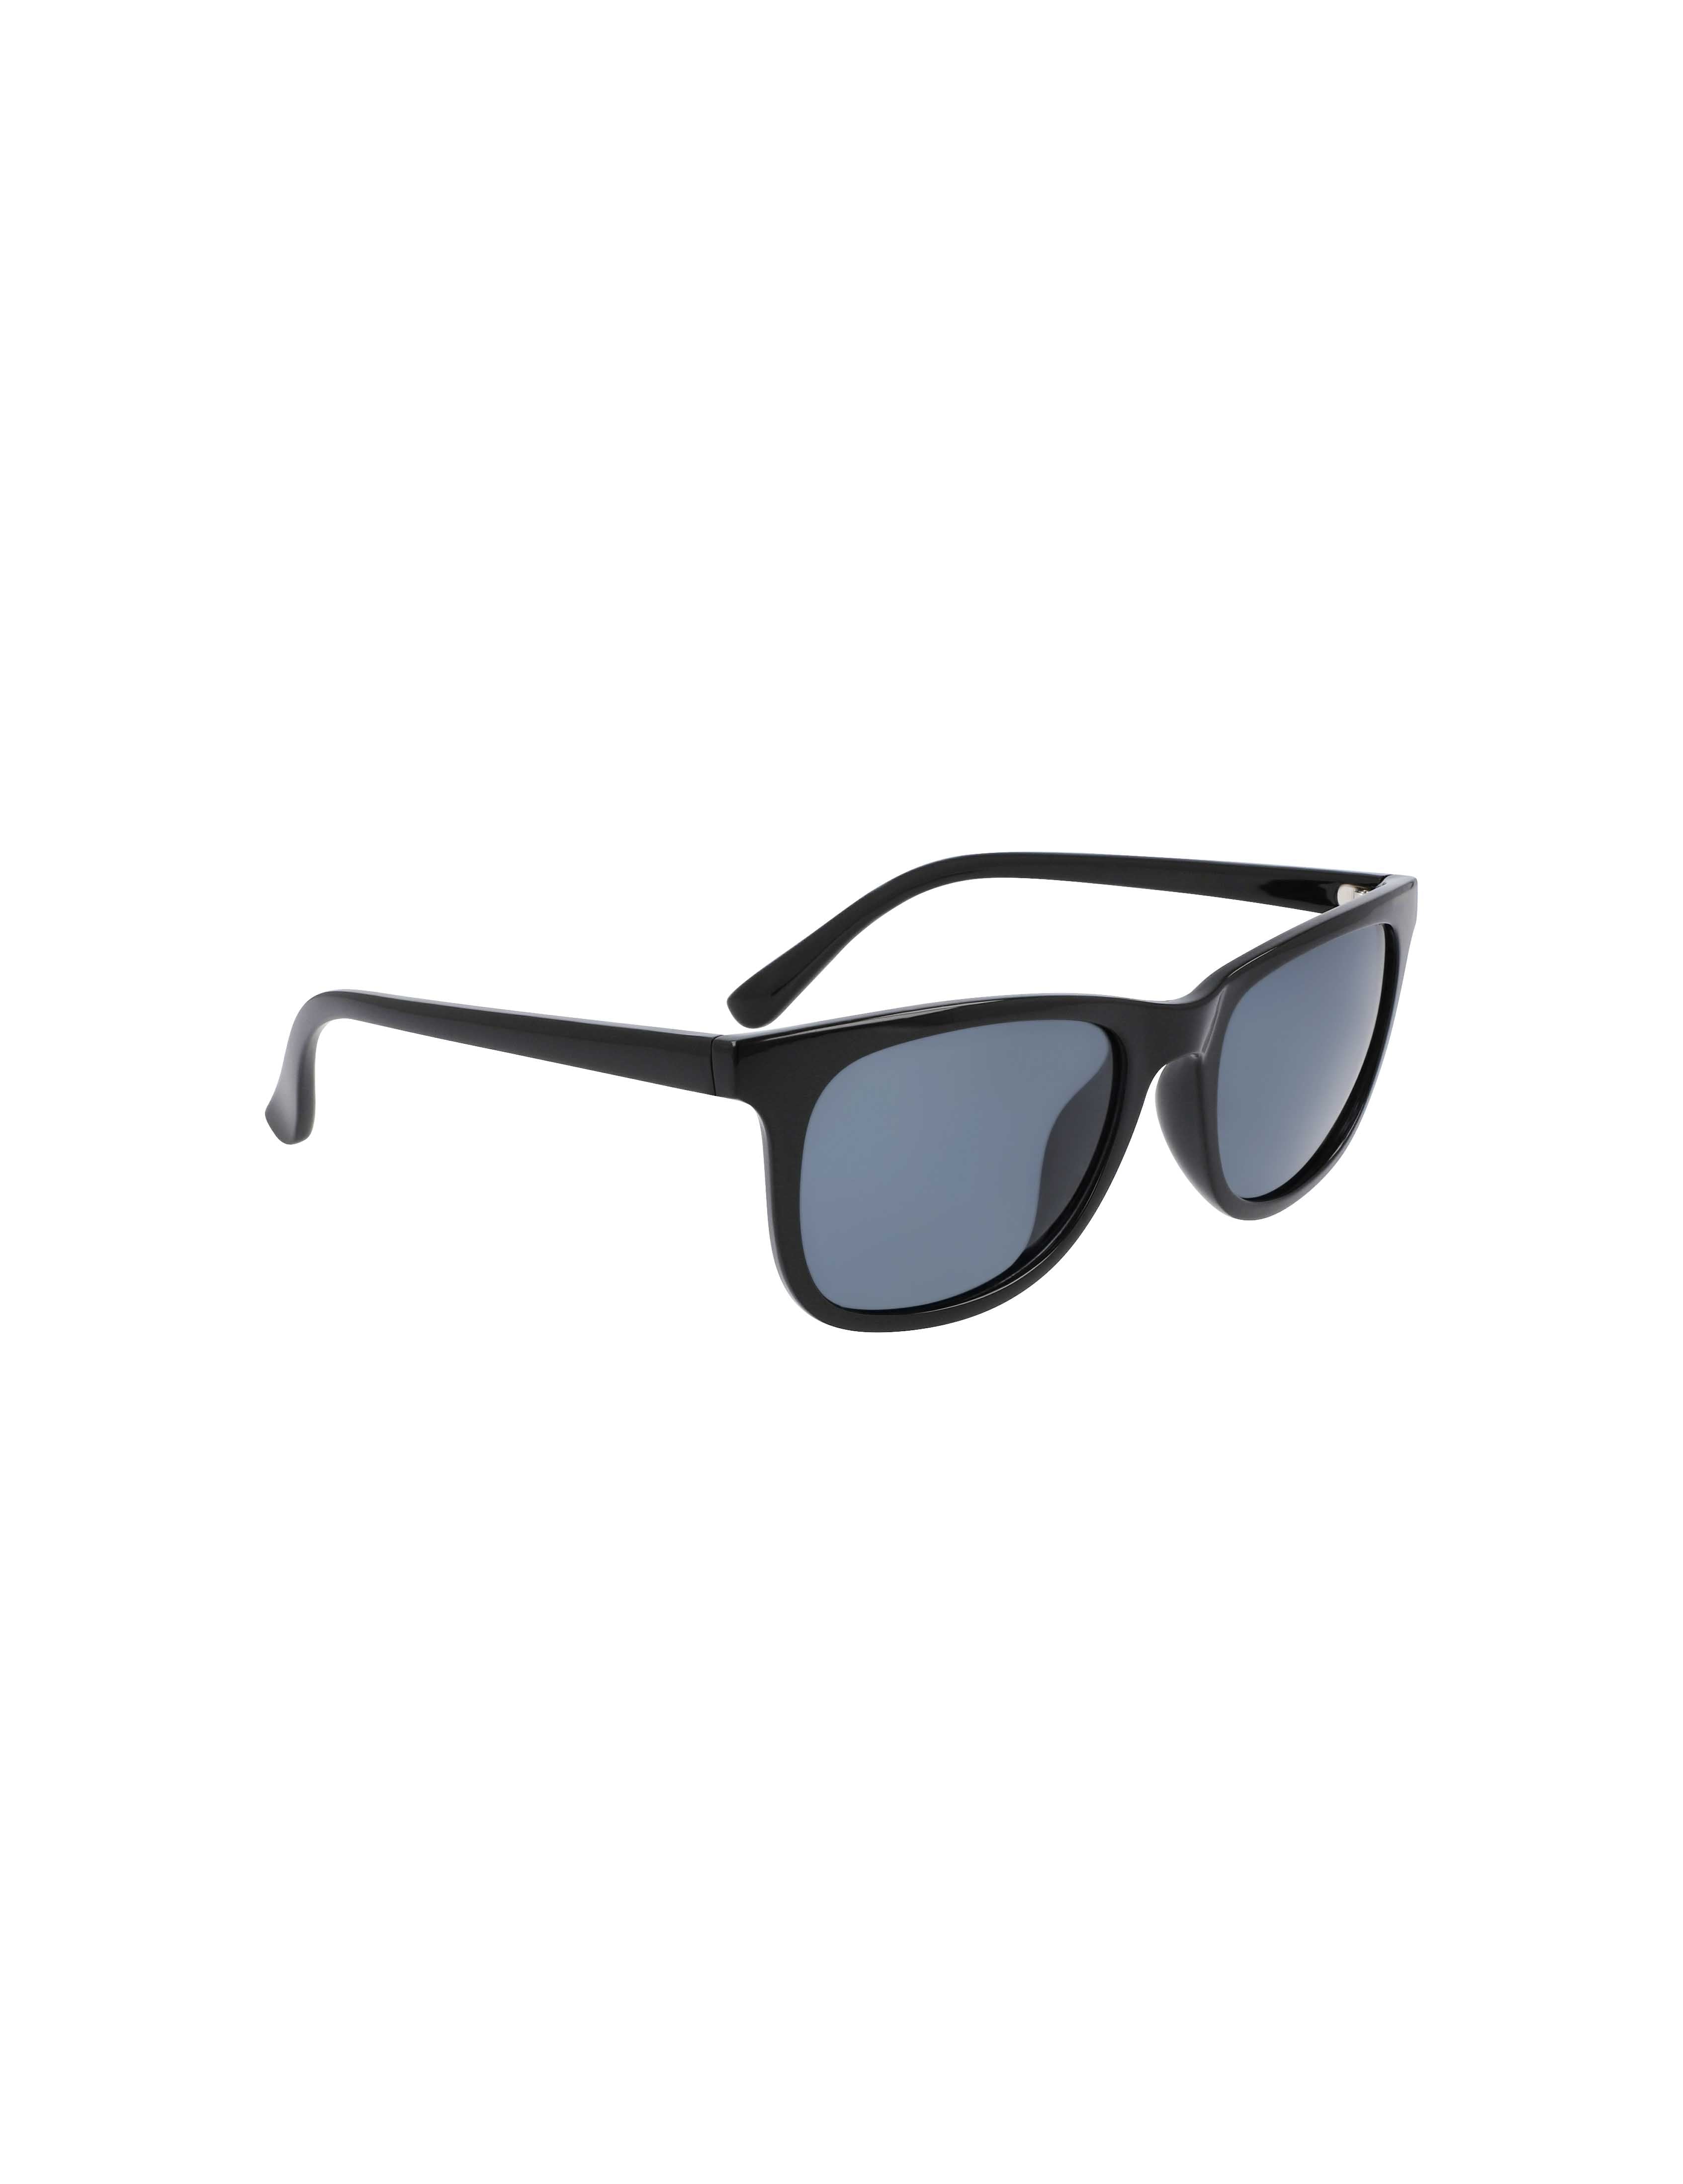 Black Square Sunglasses - Grey Polarized